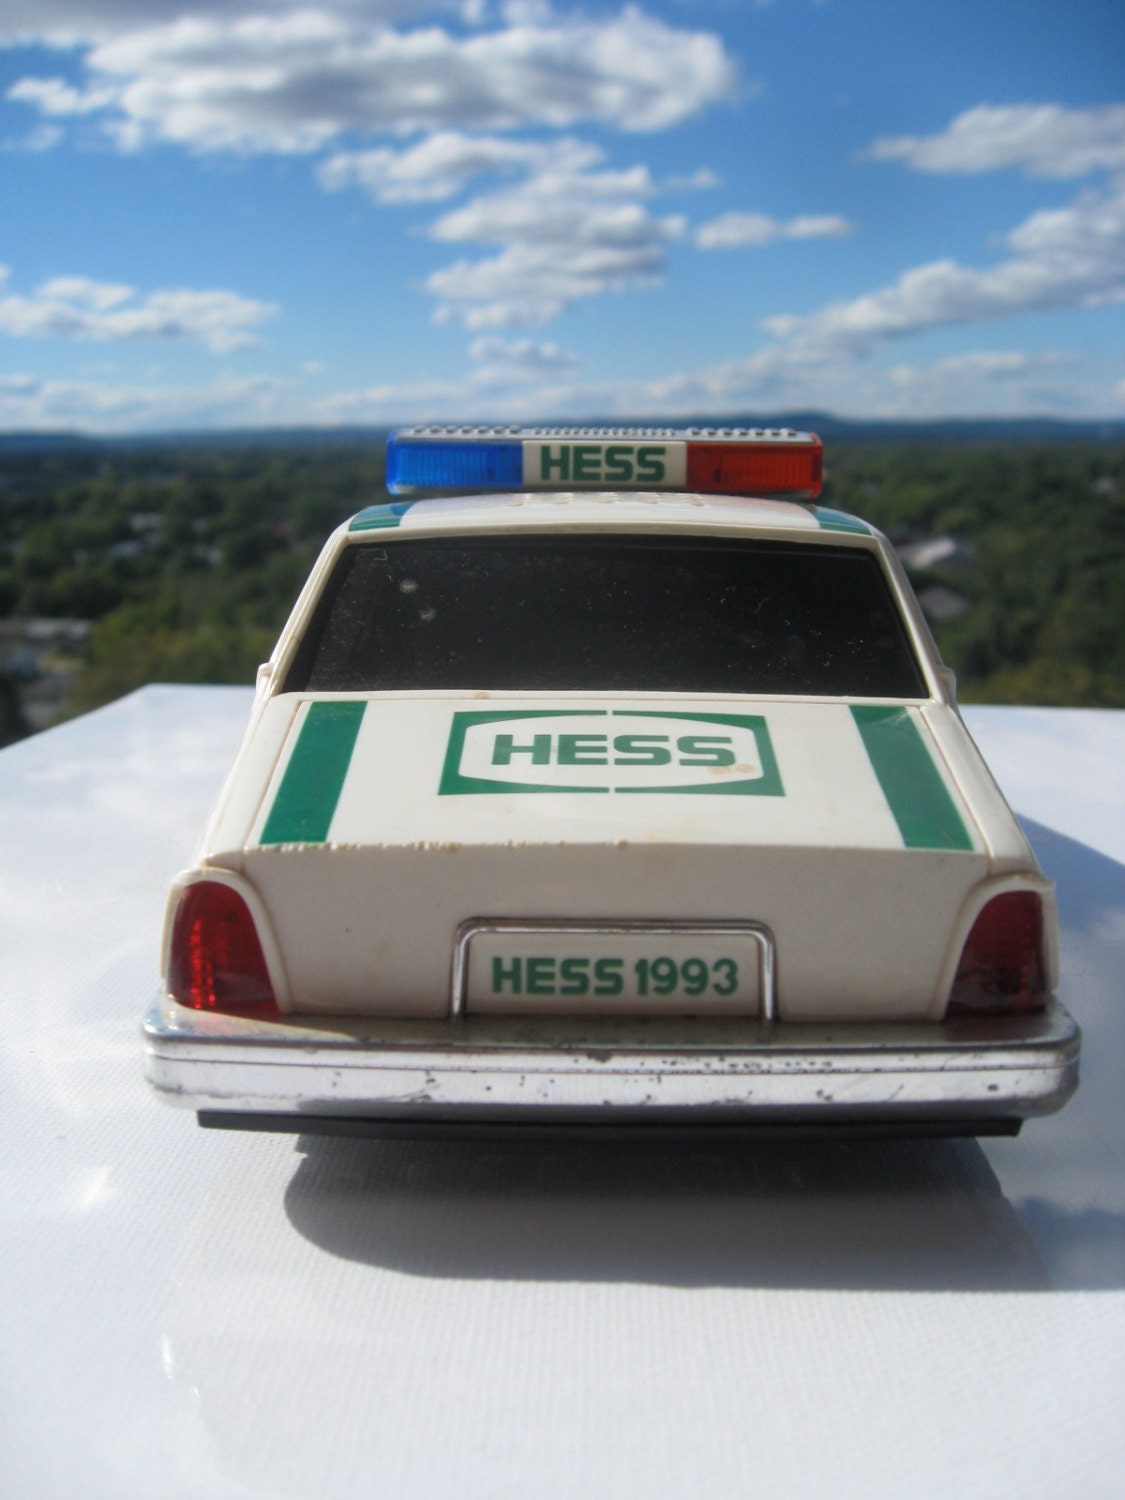 Vintage Hess Police Car 1993 by GraceParadise on Etsy